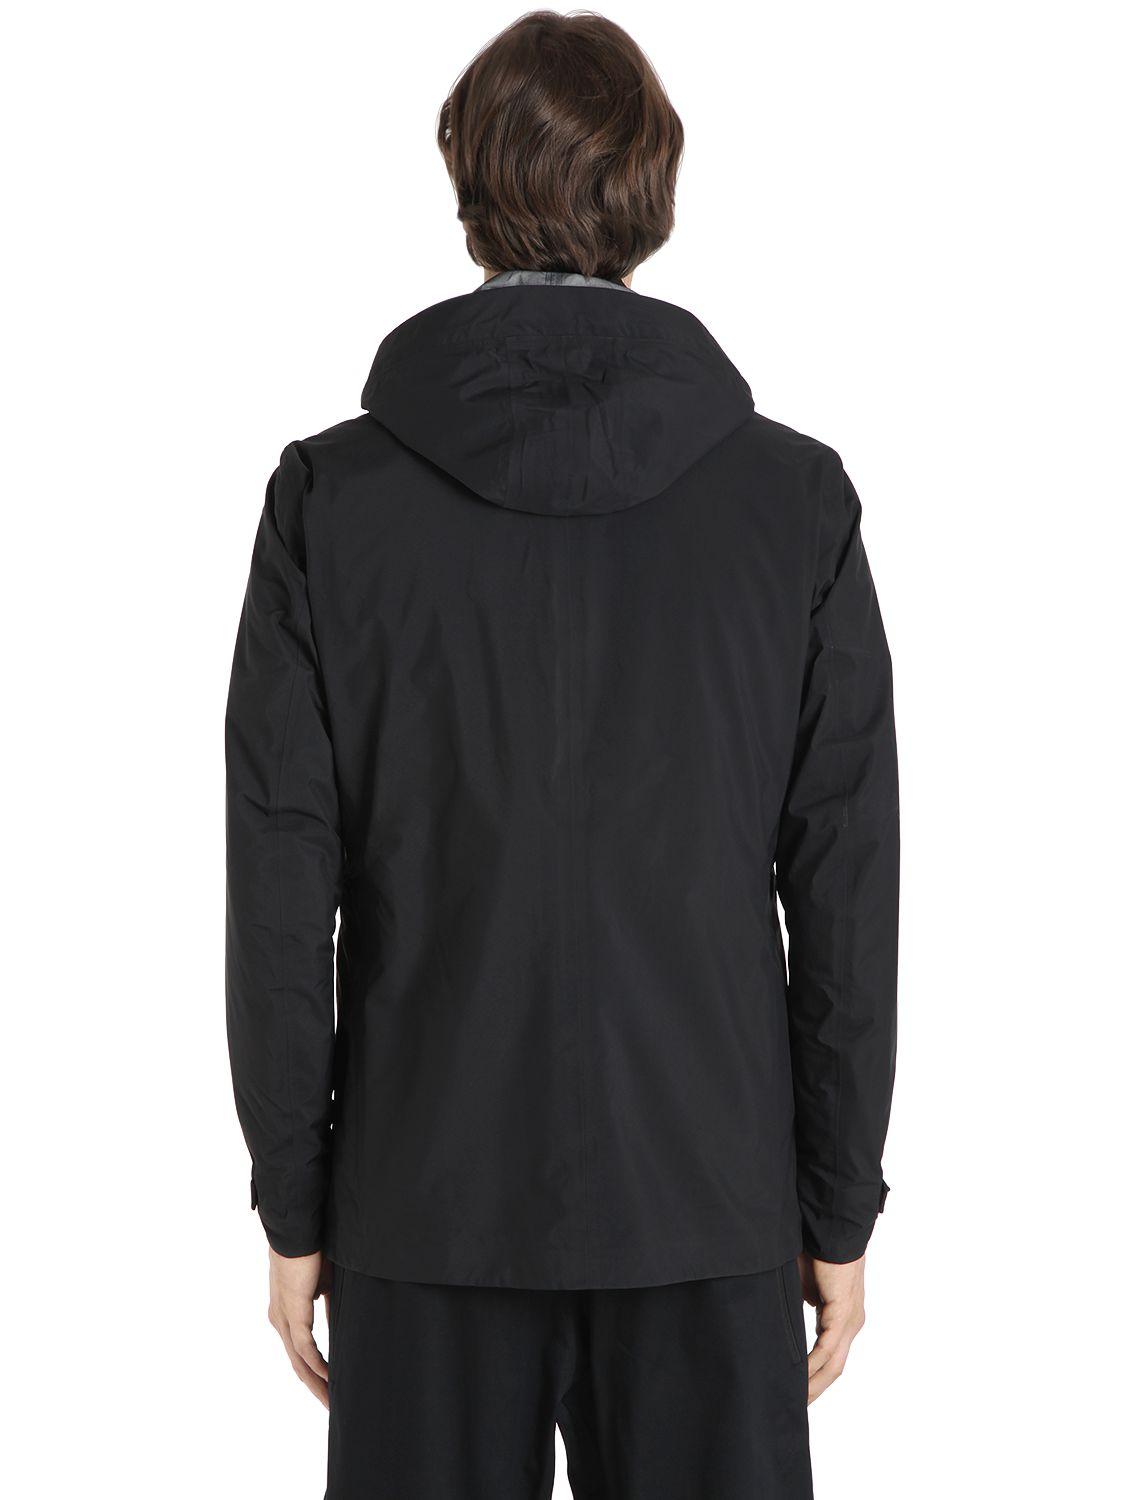 Nike Nikelab Acg System Blazer Down Jacket in Black for Men - Lyst